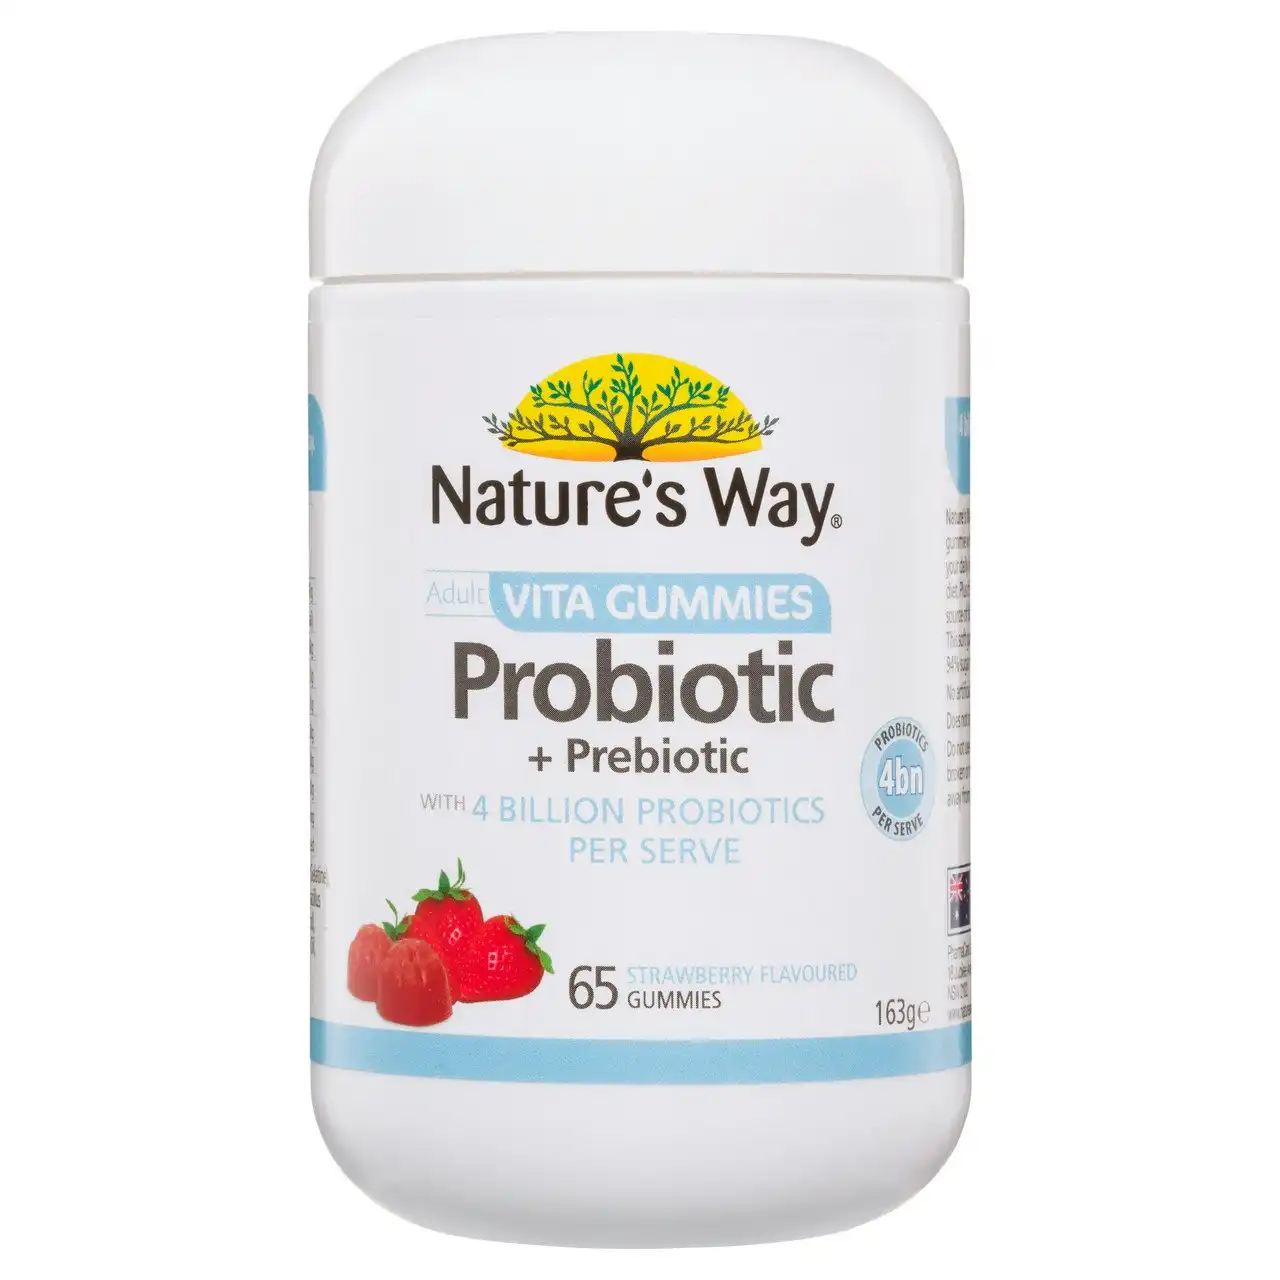 Nature's Way Adult Vita Gummies Probiotic + Prebiotic 65's